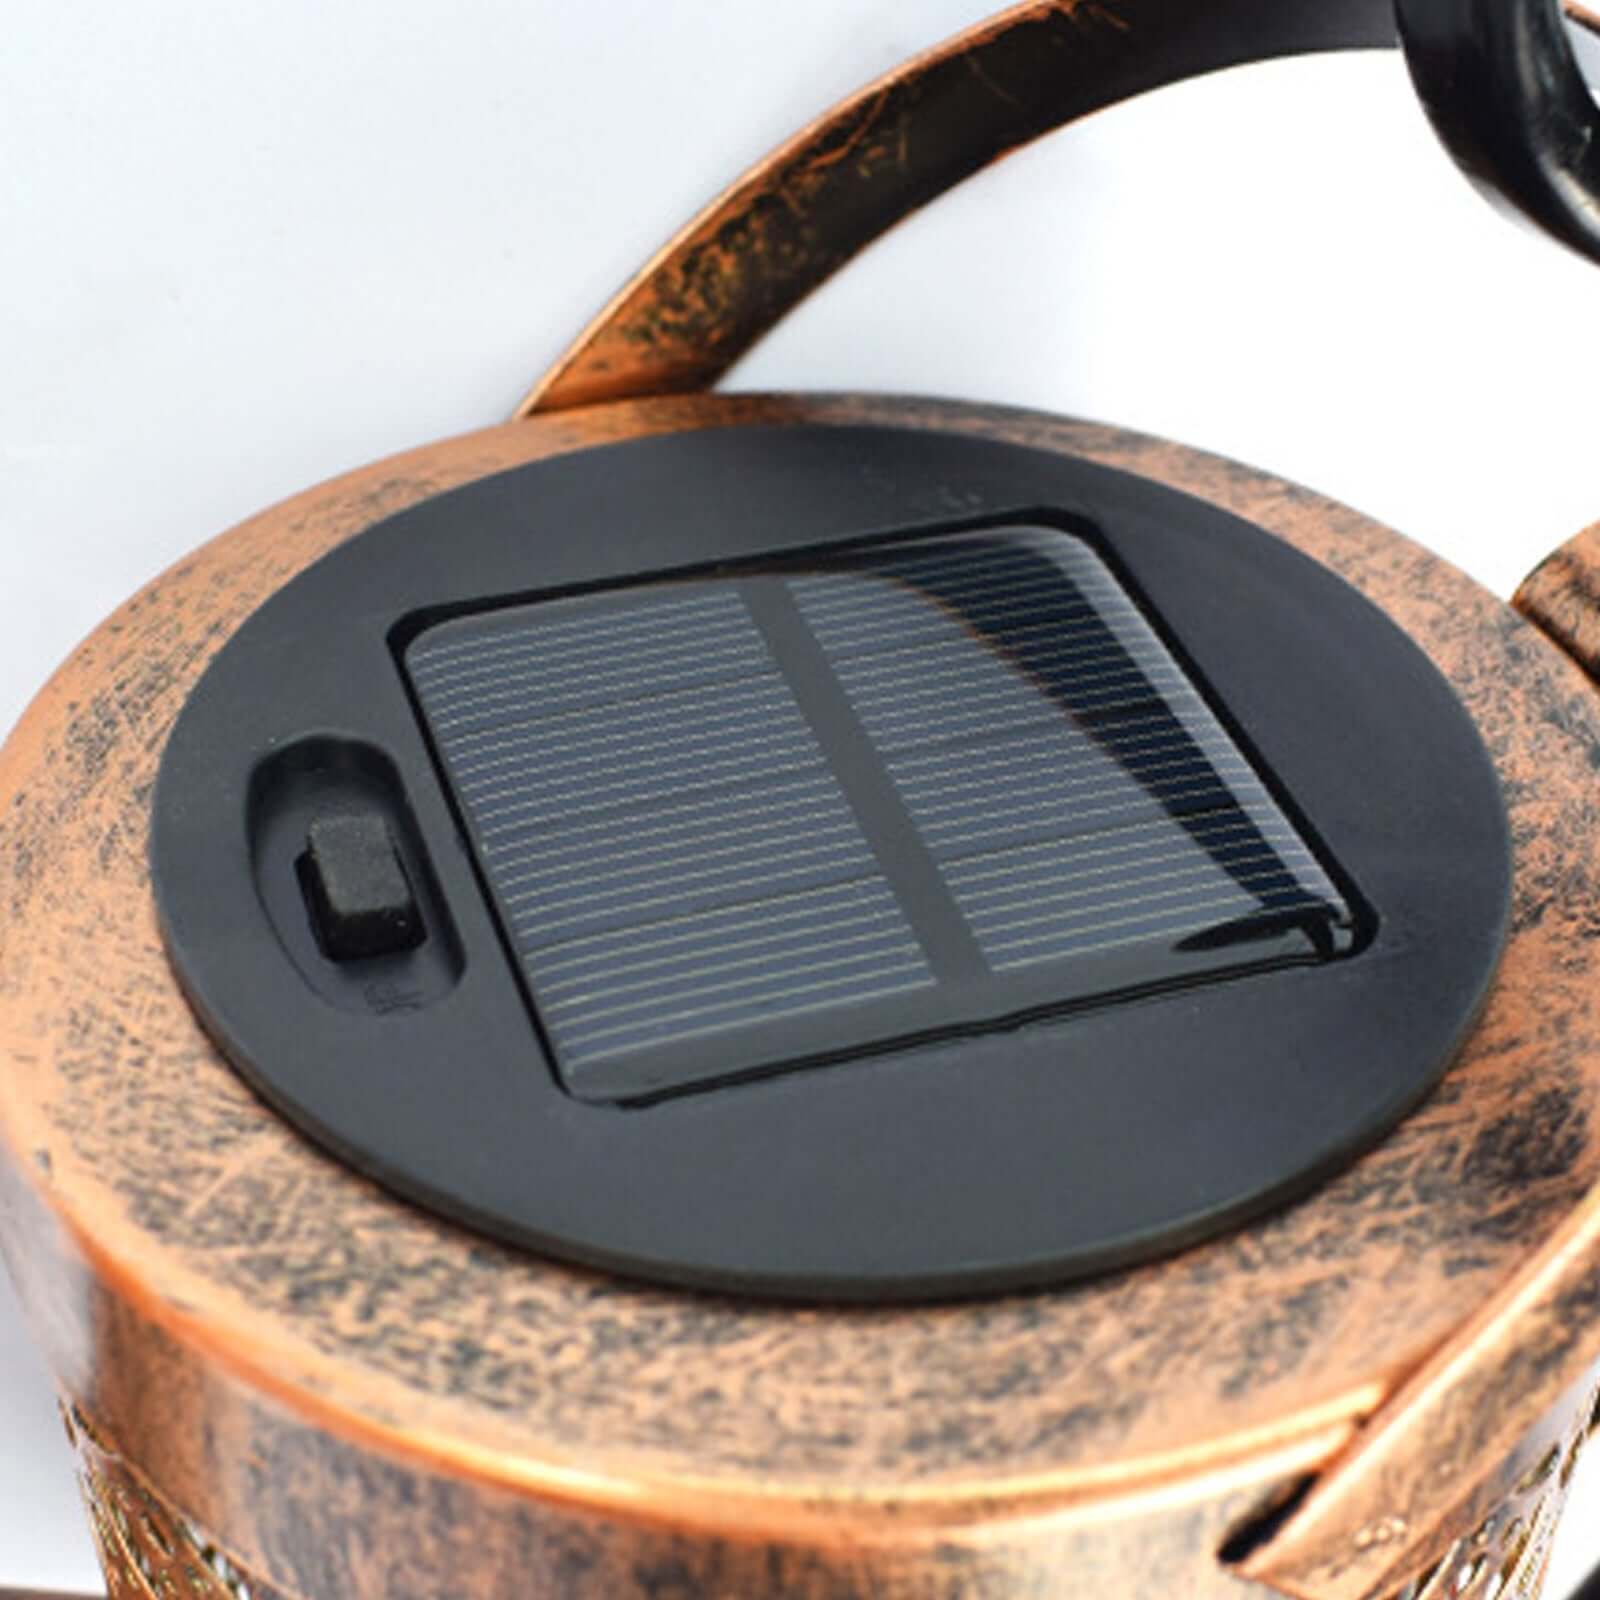 Solar Charging Eco-Friendly LED Outdoor Lamp Home Decor - EGGBOX TECH